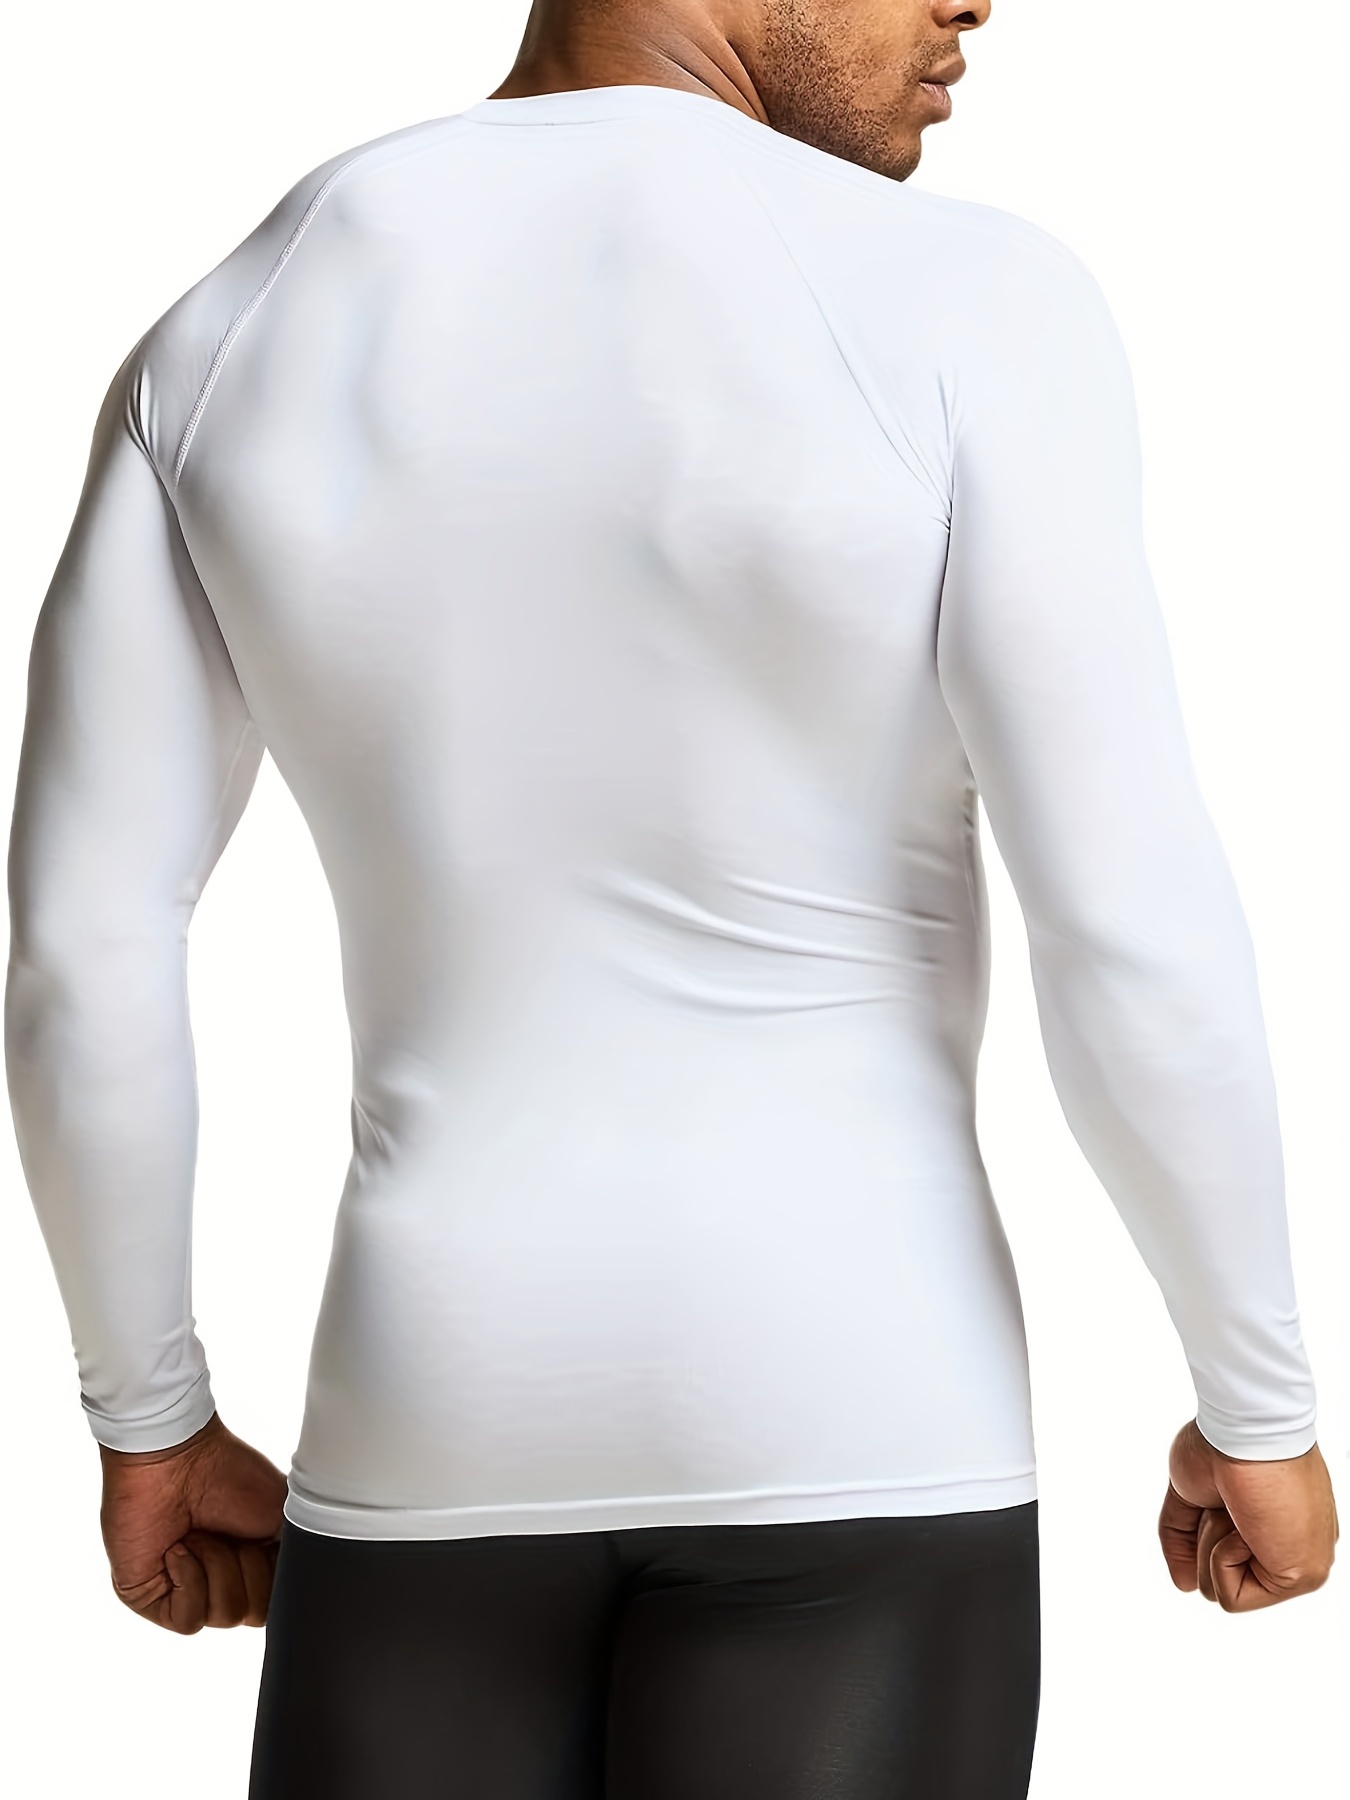 pack 3 Camisetas térmicas caballero manga larga 100% algodón